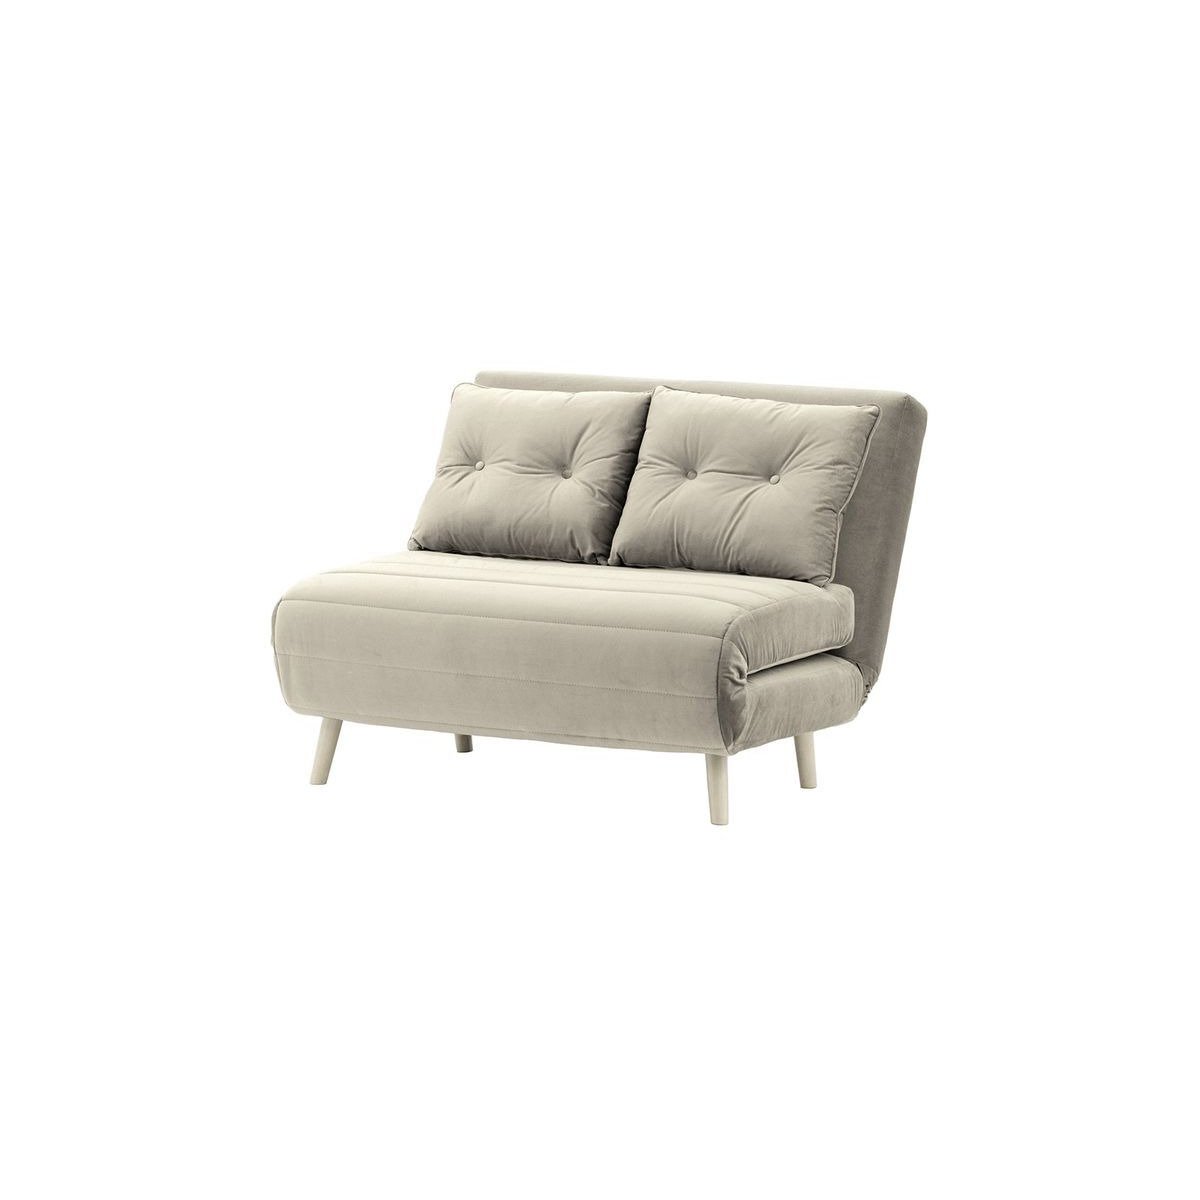 Flic Small Sofa Bed - width 103 cm, silver, Leg colour: white - image 1